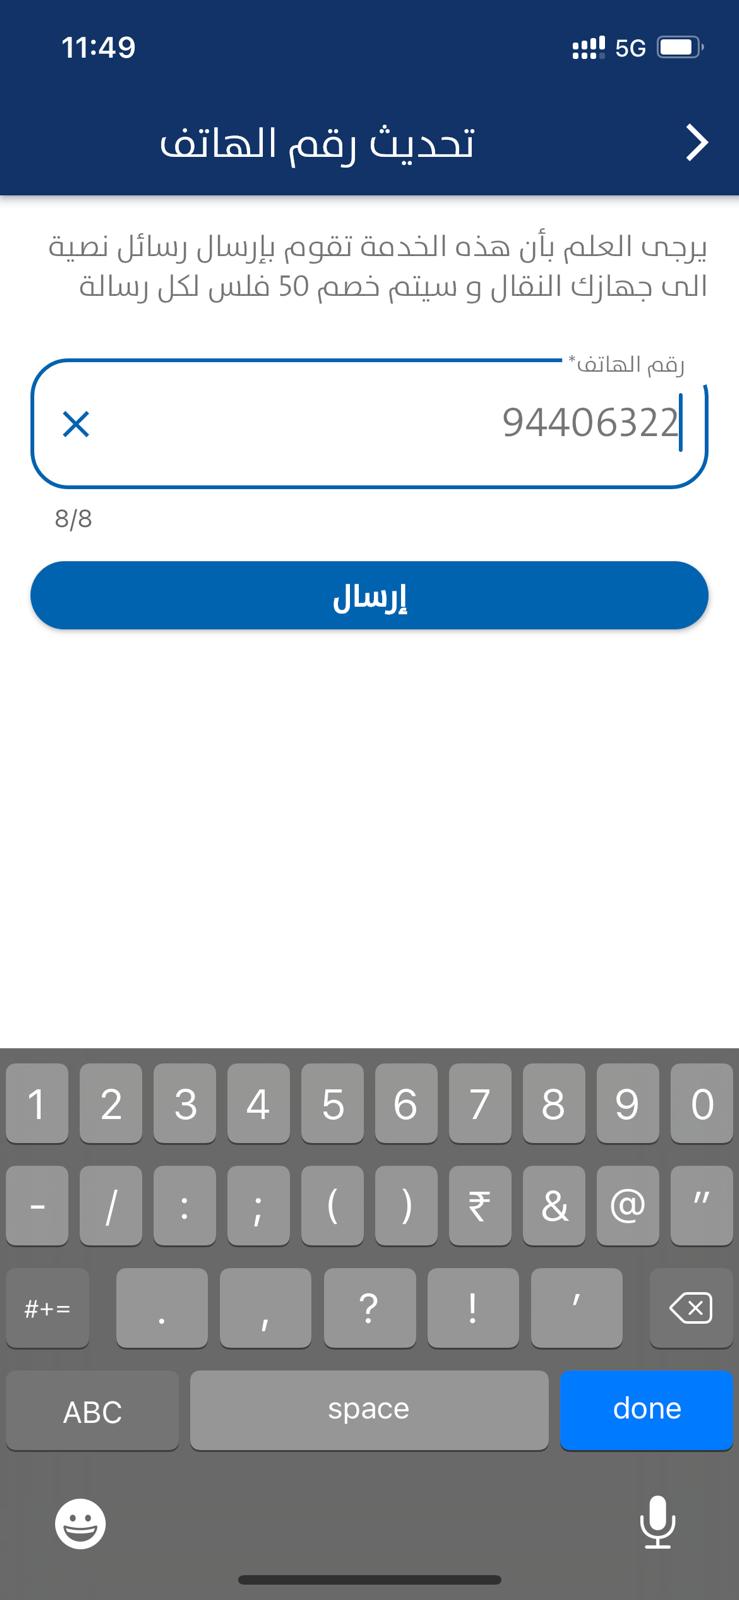 Updating mobile no IN PACI using sahel app